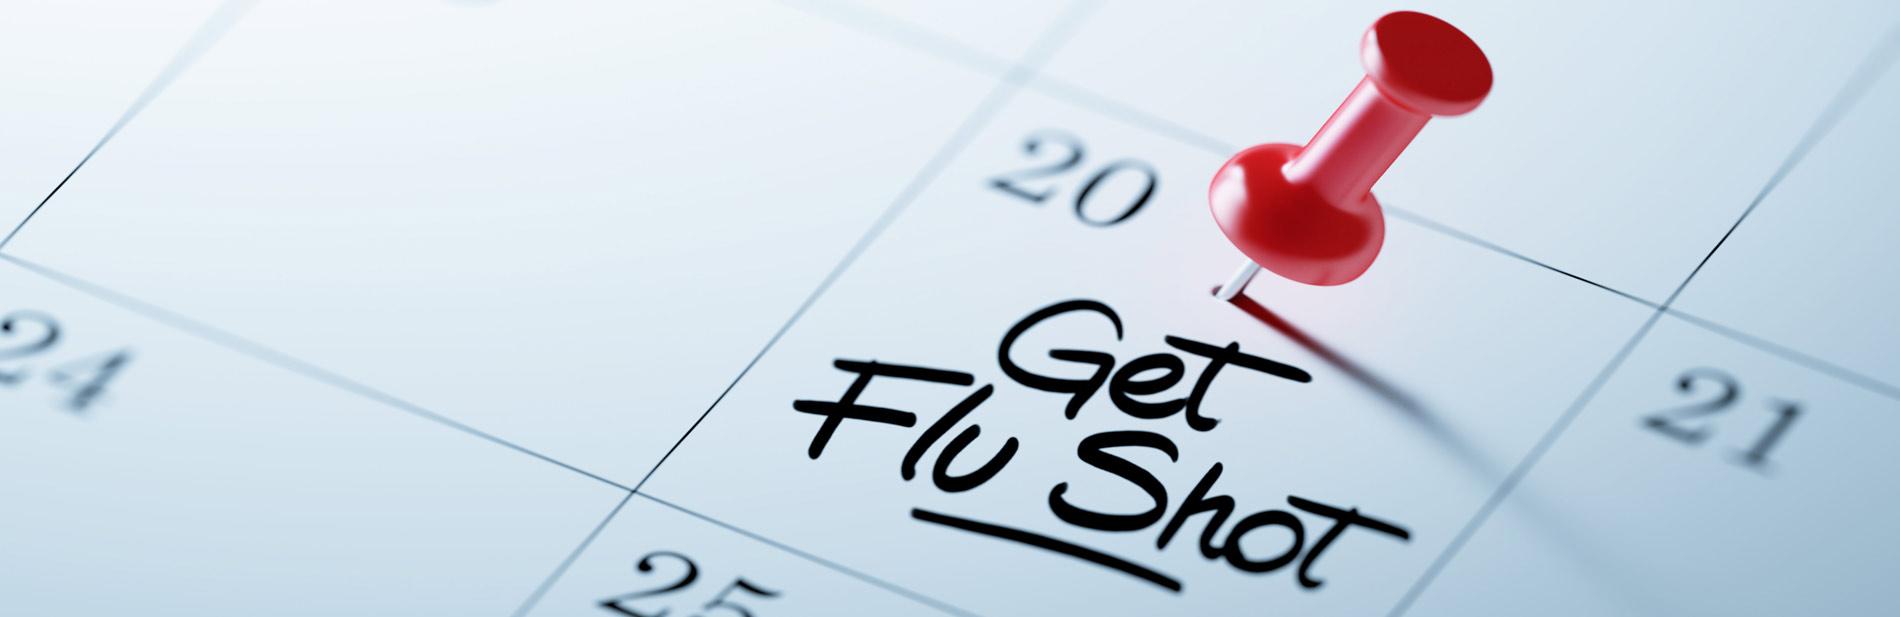 Get Flu Shot